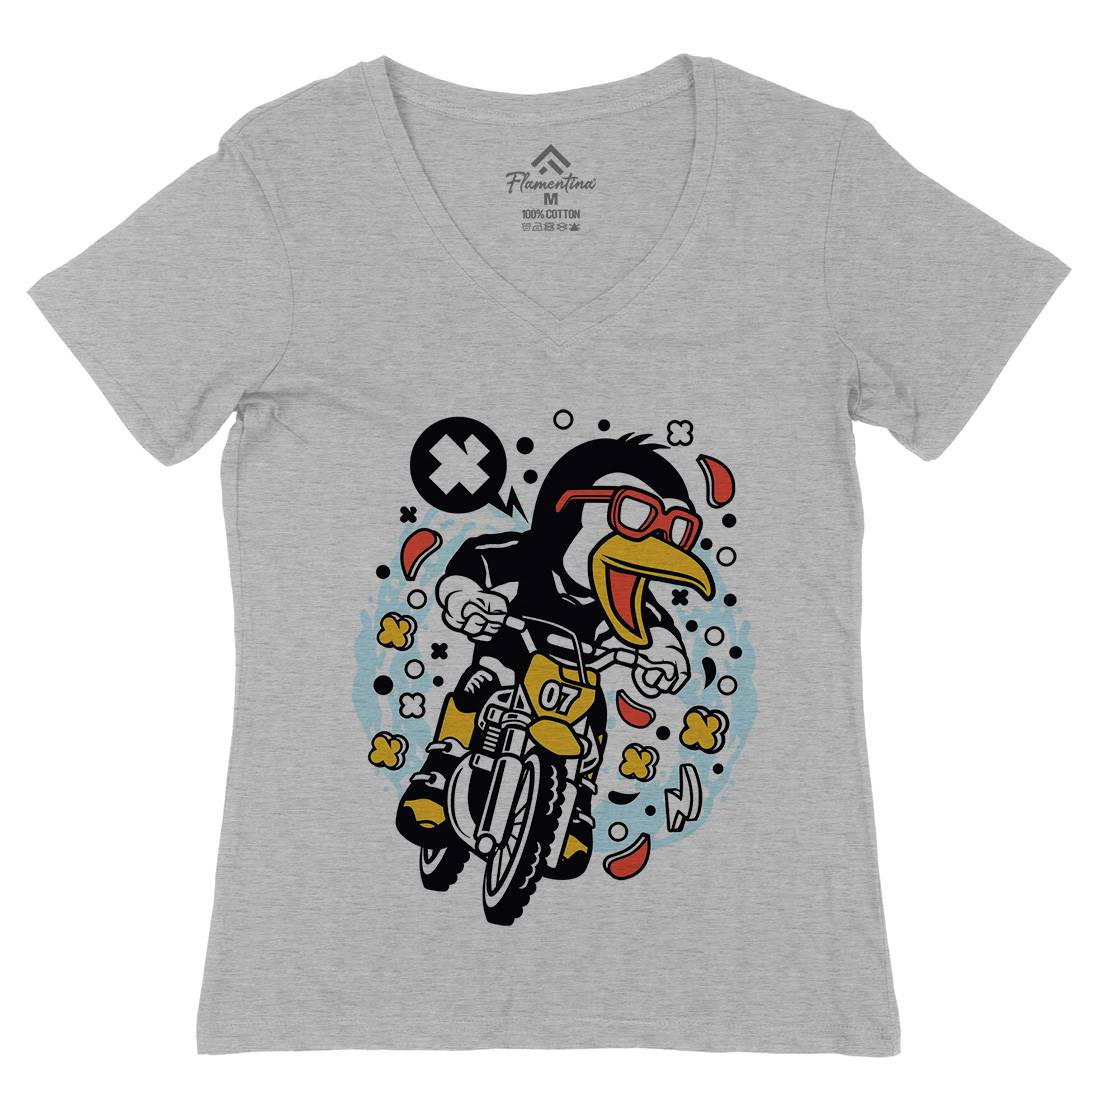 Penguin Motocross Rider Womens Organic V-Neck T-Shirt Motorcycles C604